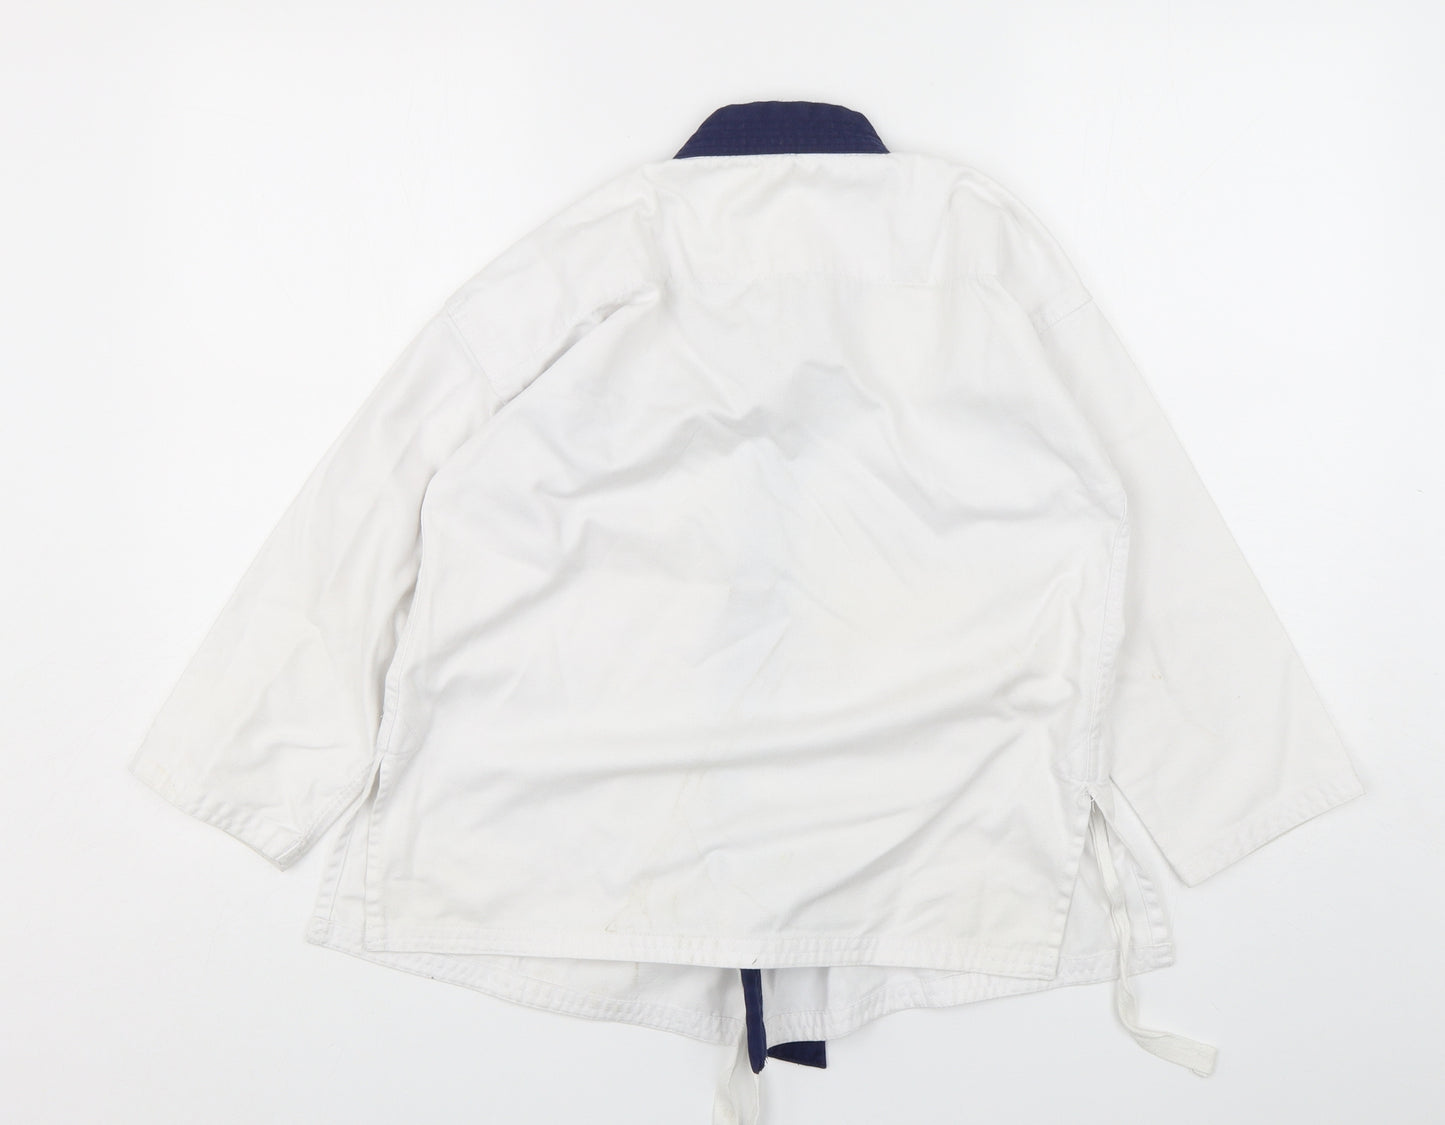 World Ju Jitsu federation  Boys White V-Neck  Polyester Pullover Jumper Size 10 Years  Pullover - Ju Jitsu Gi